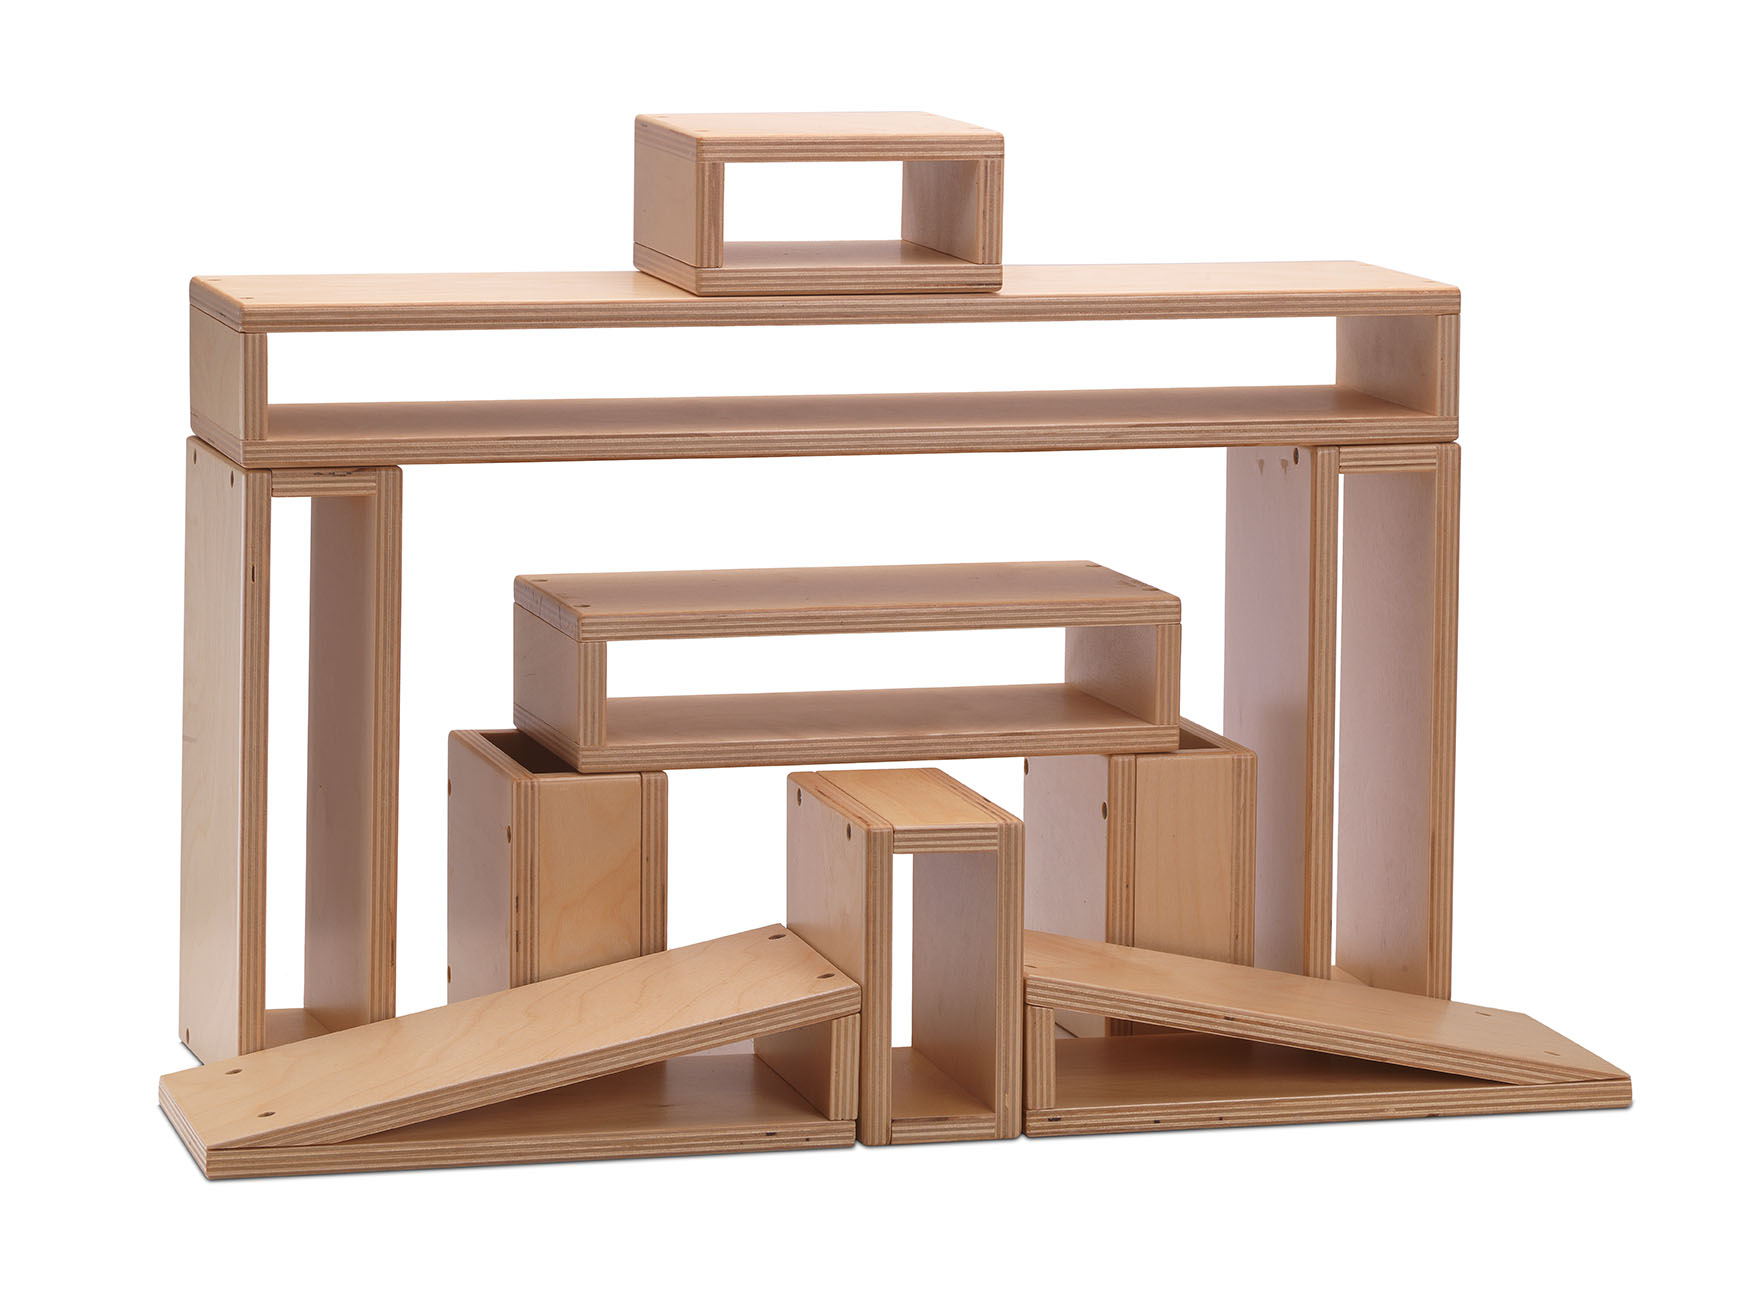 PT232-Millhouse-Early-Years-Furniture-Small-Hollow-Blocks-Set_Main_RGB.jpg